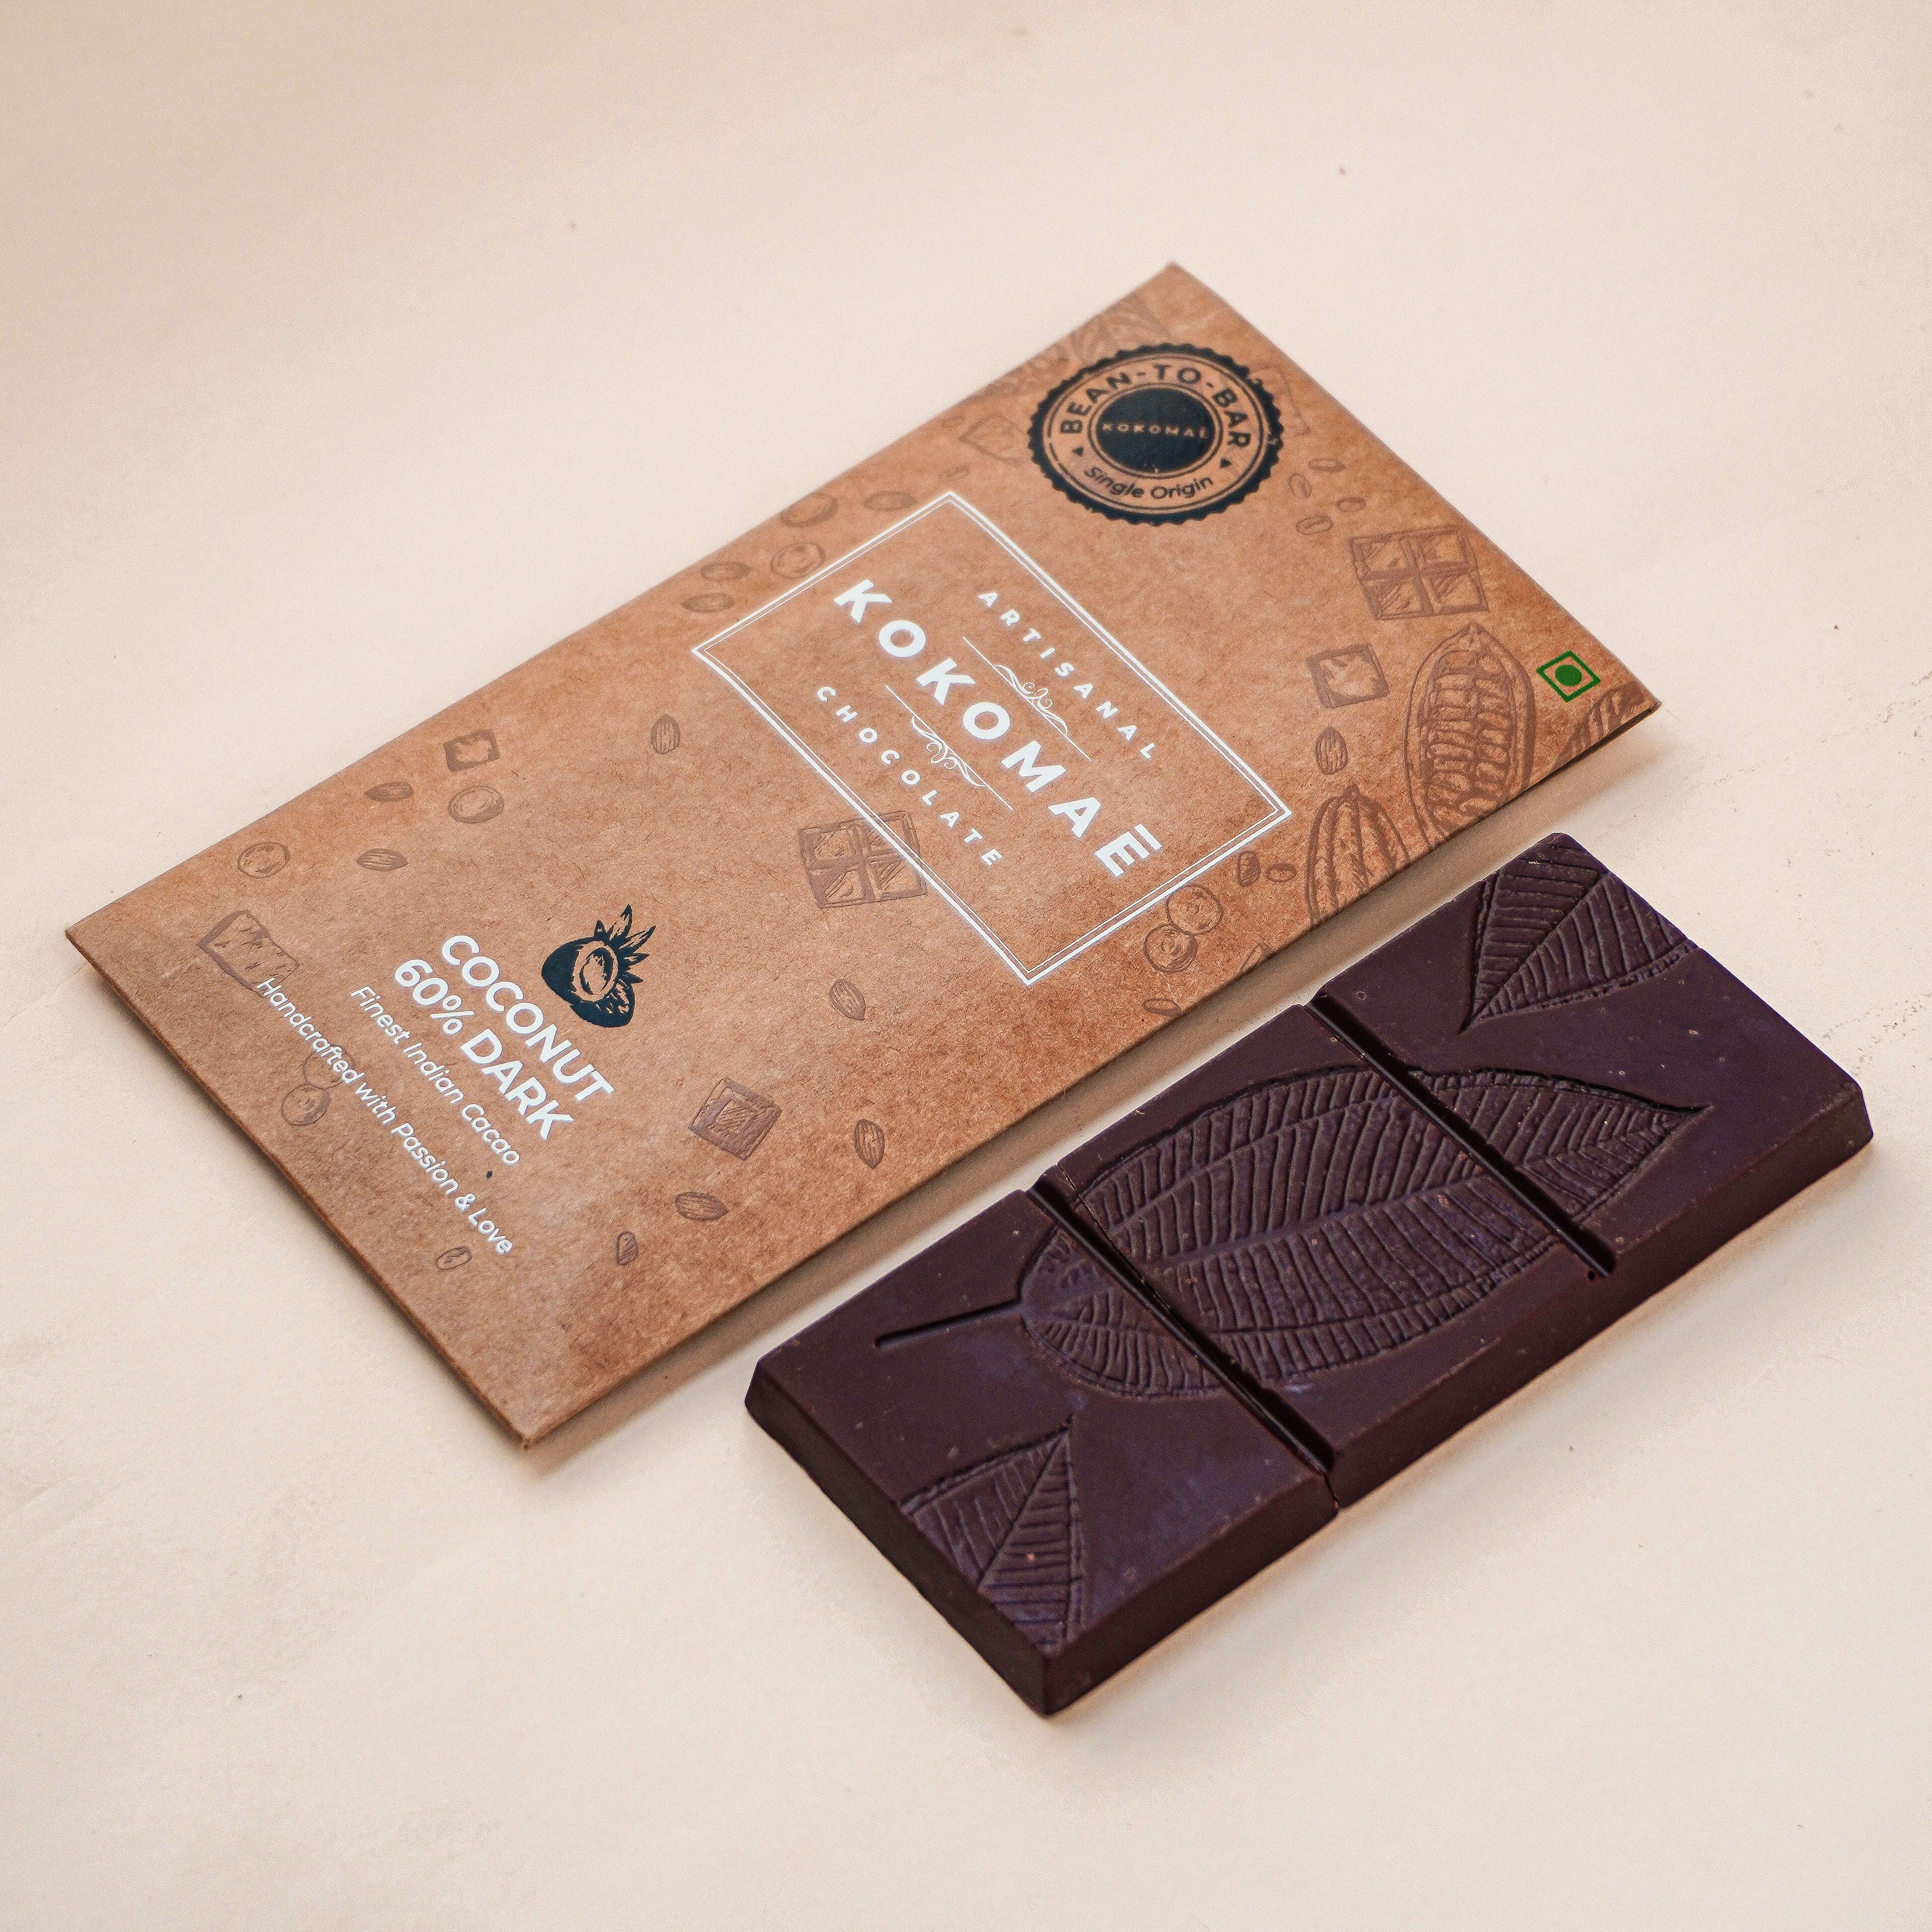 Kokomaē Bean to Bar 60% Organic Dark Chocolate with Coconut and Finest Cocoa Beans from Idukki Region